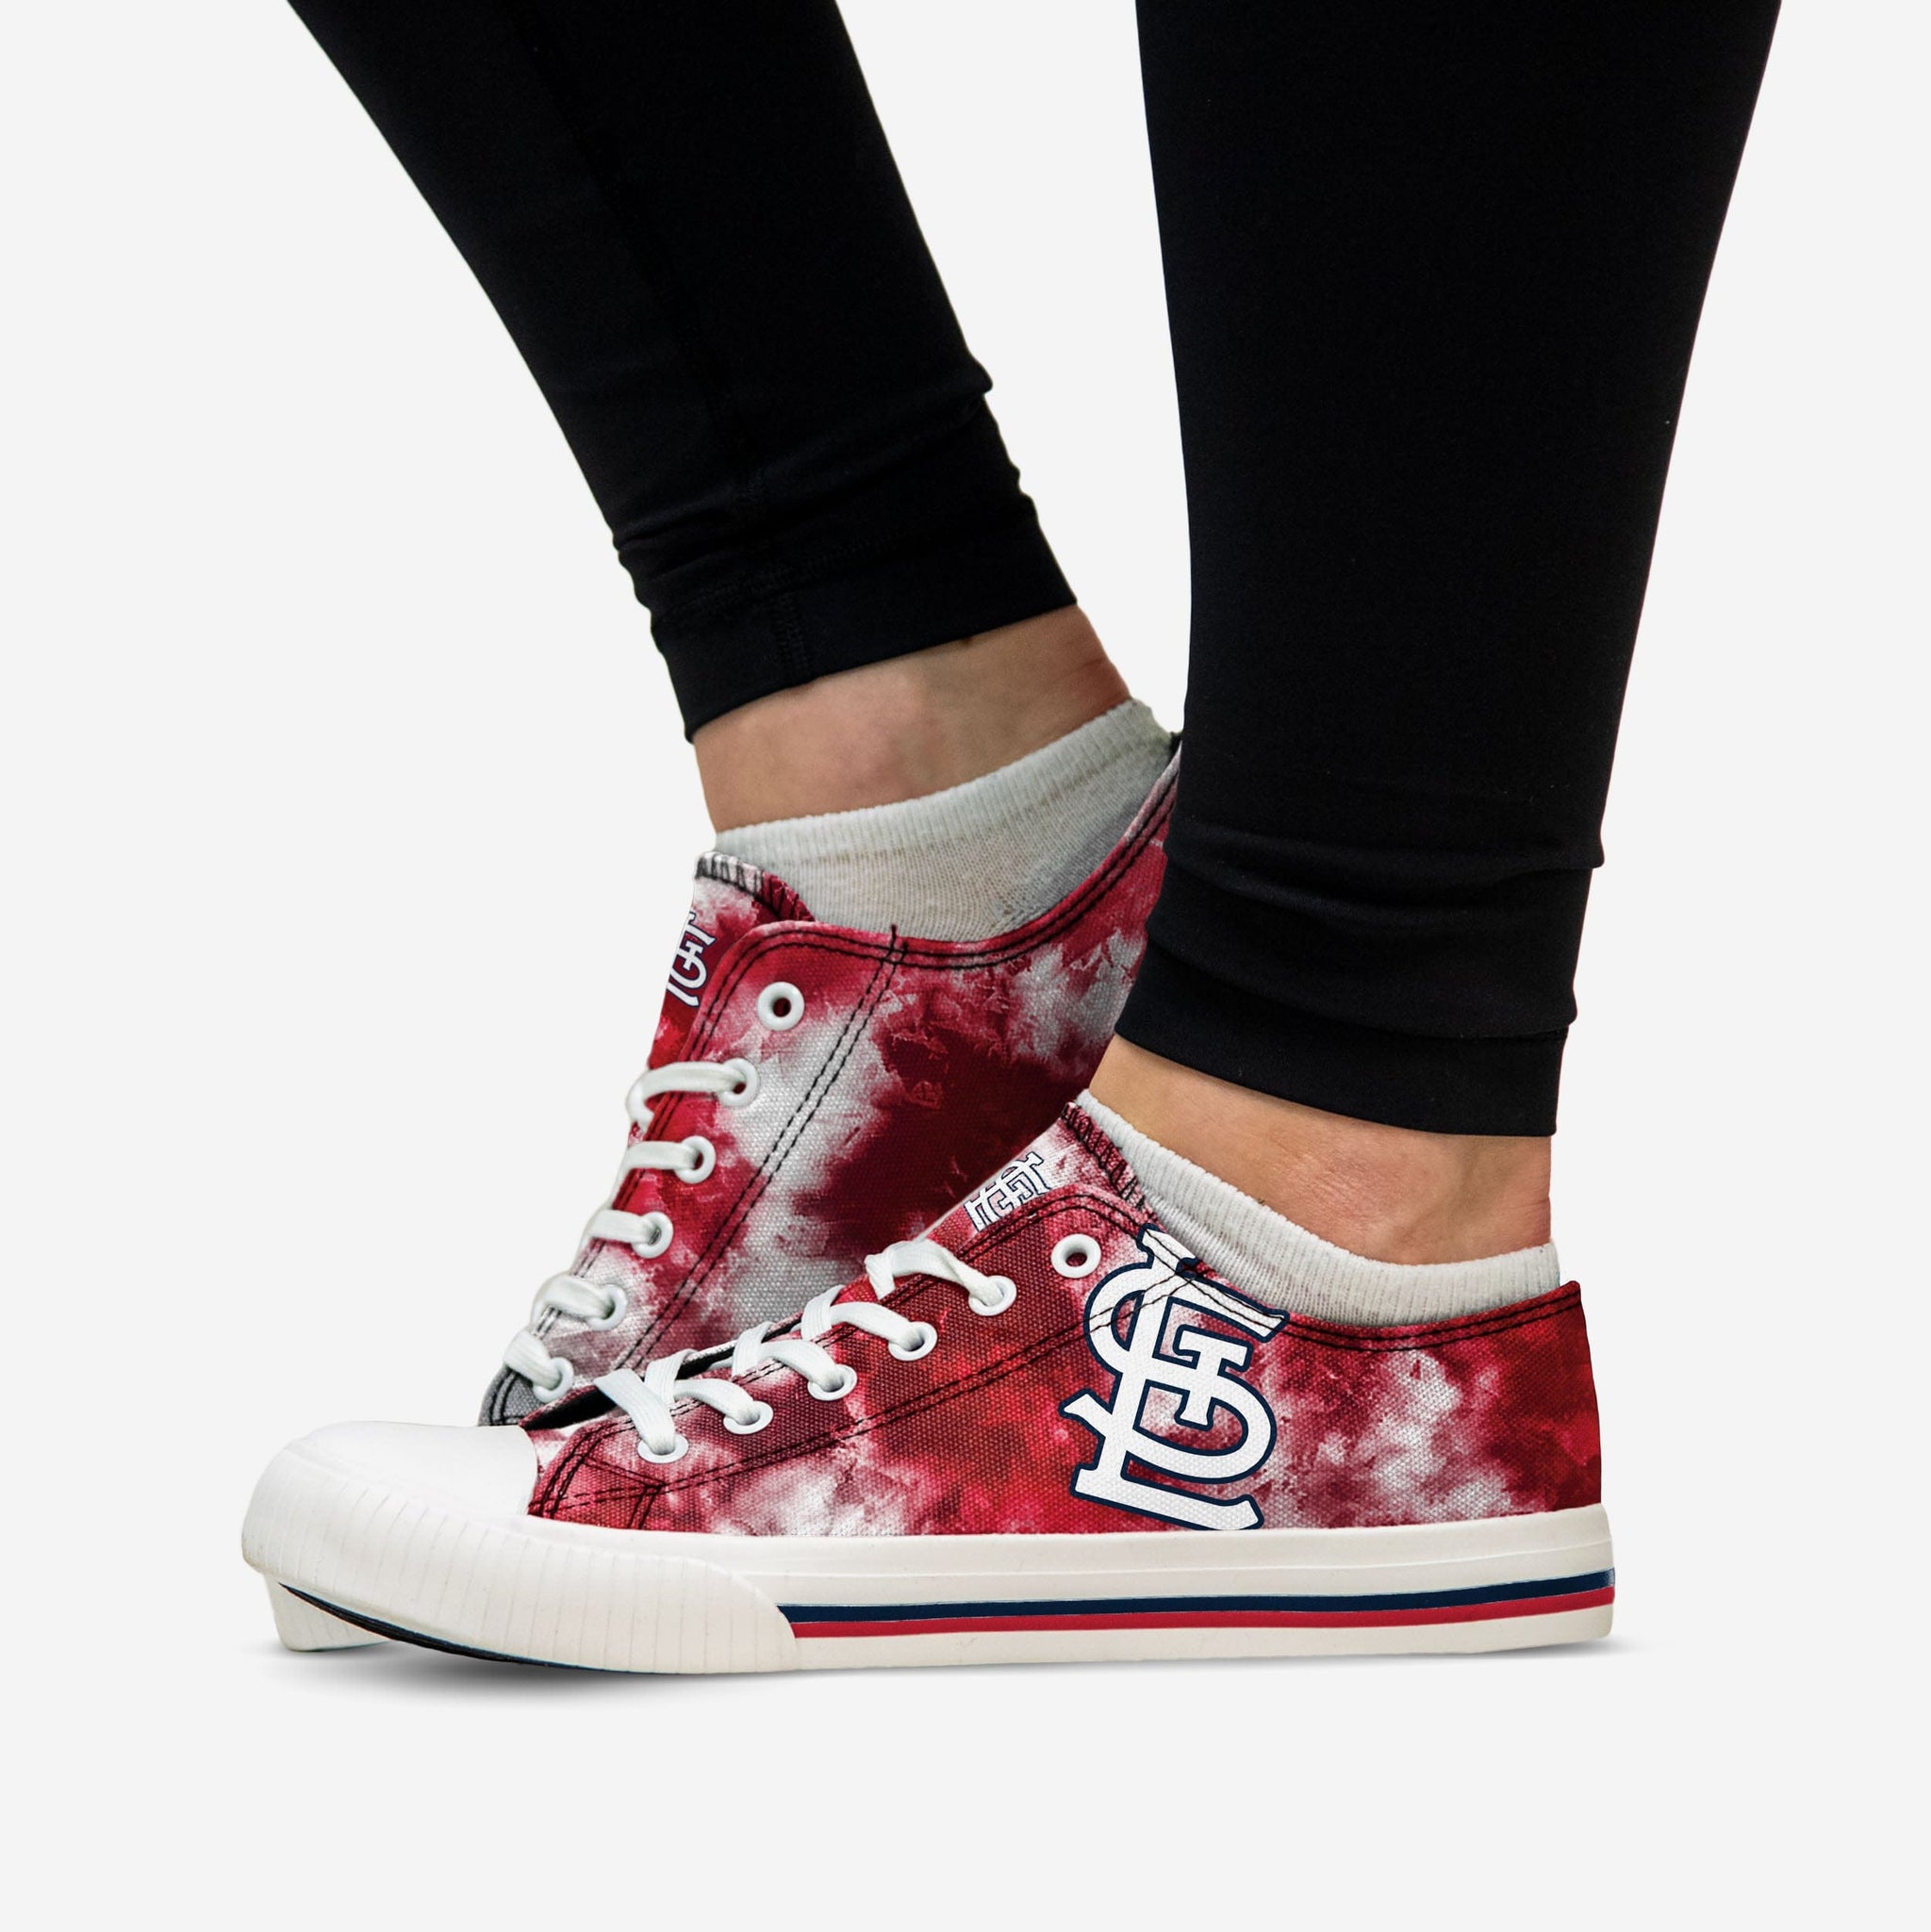 St. Louis Cardinals Designed Sneakers